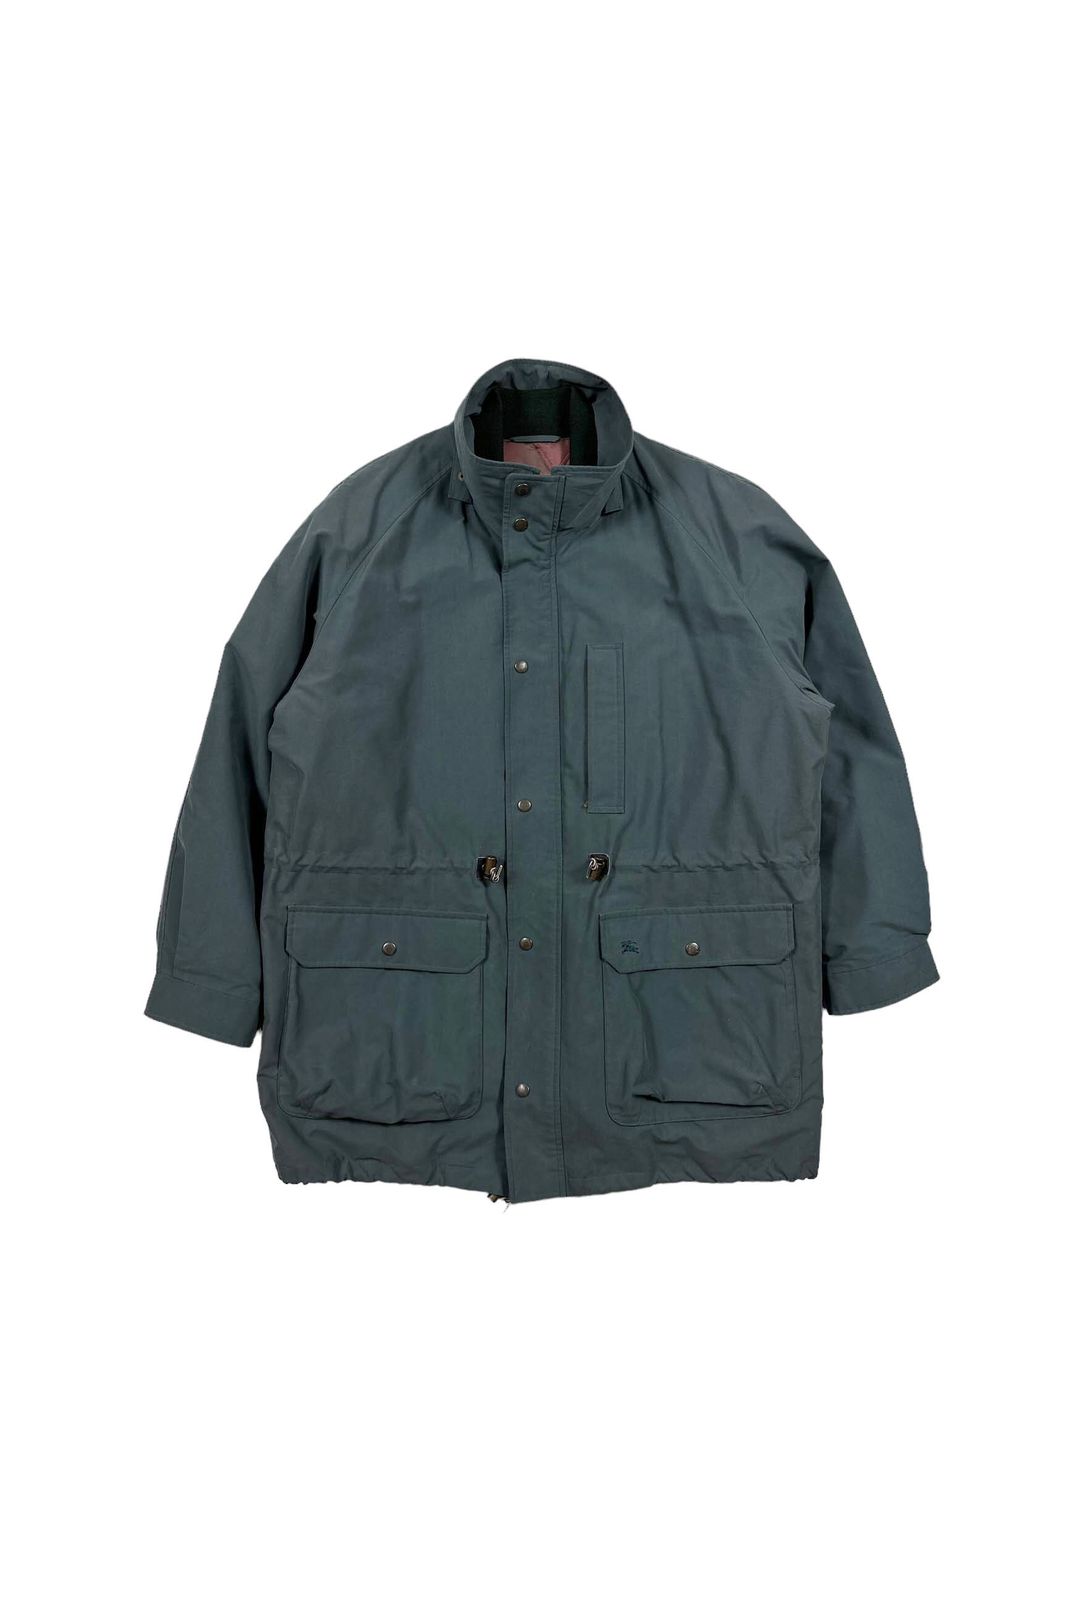 90's Burberrys' military coat バーバリーズ ミリタリーコート 